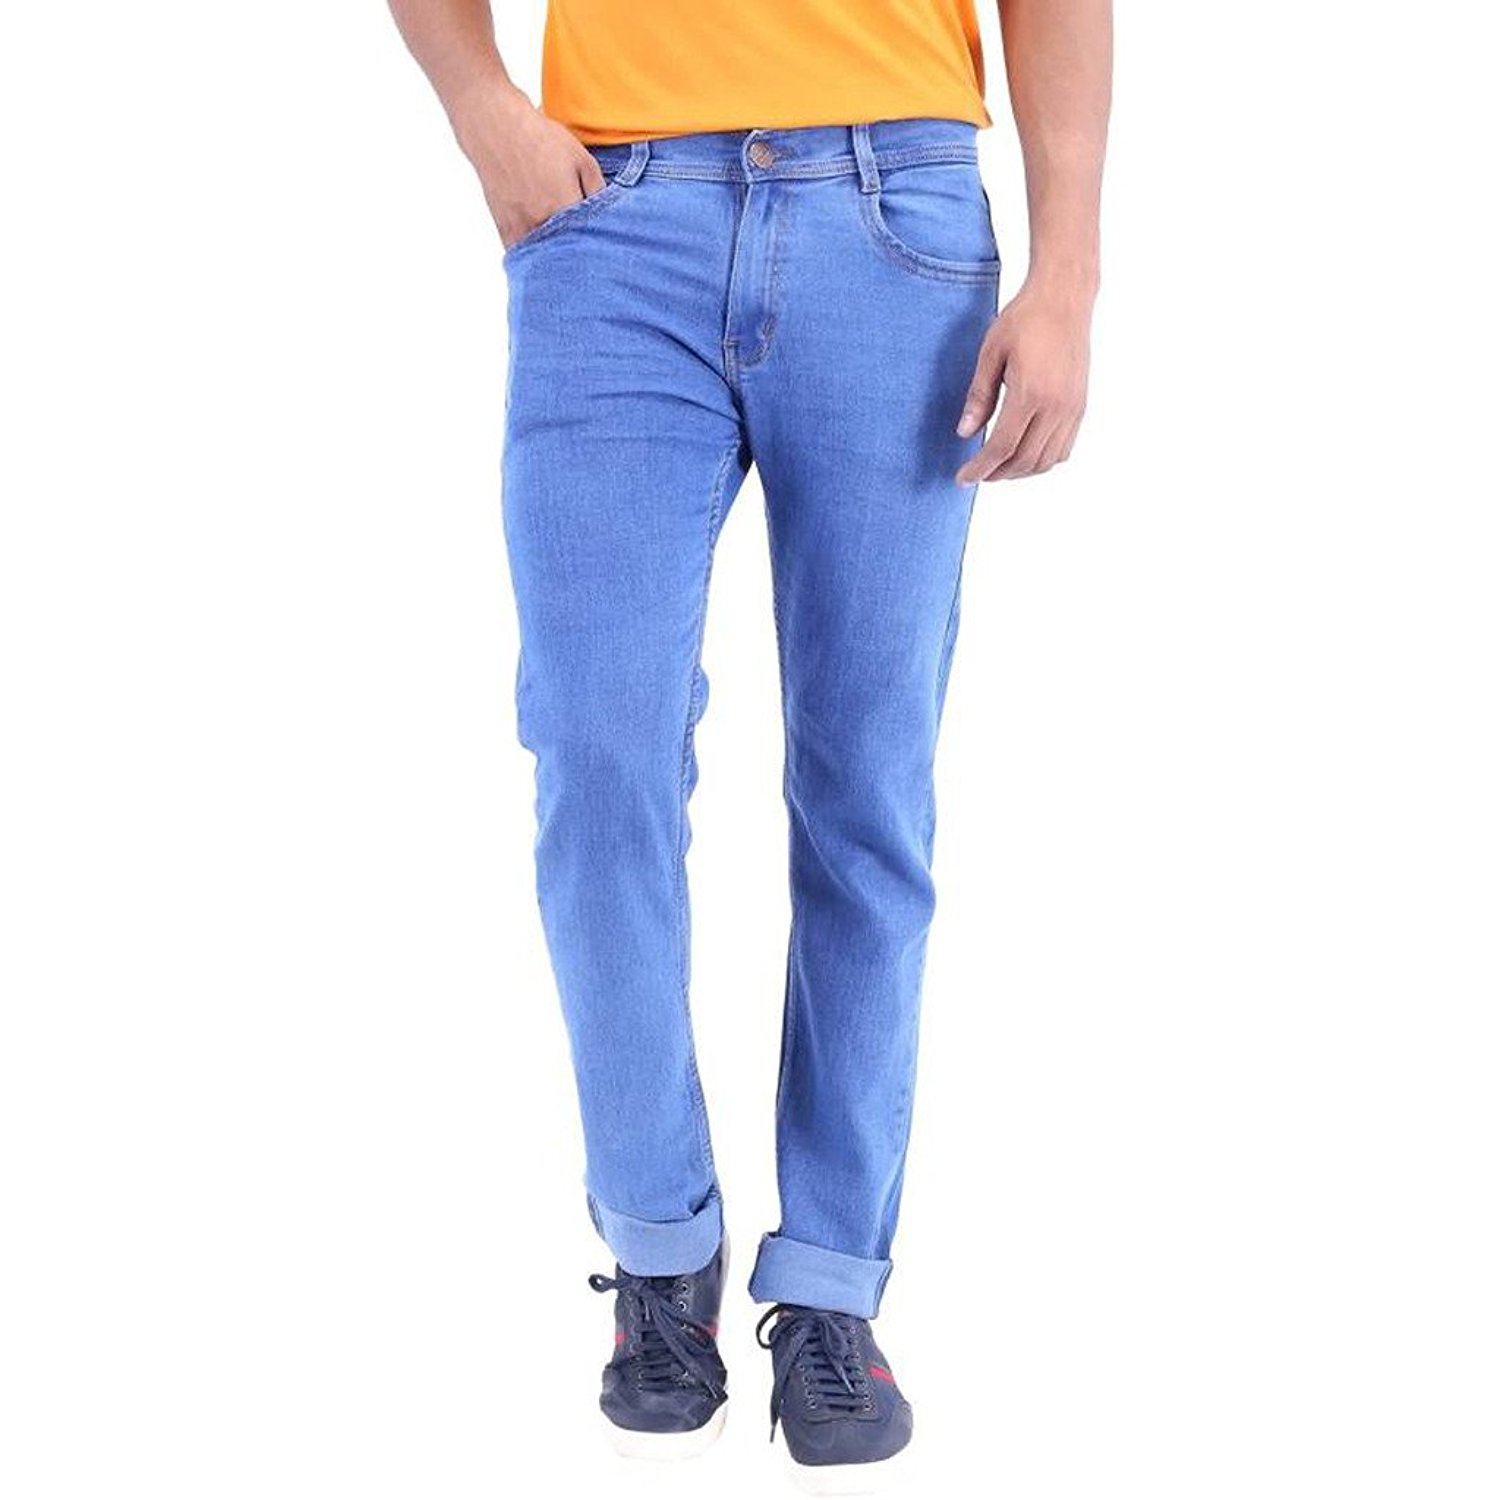 Jeans for Men , Denim Jeans, low prize jeans, branded jeans, jeans, blue jeans, dark blue jeans 